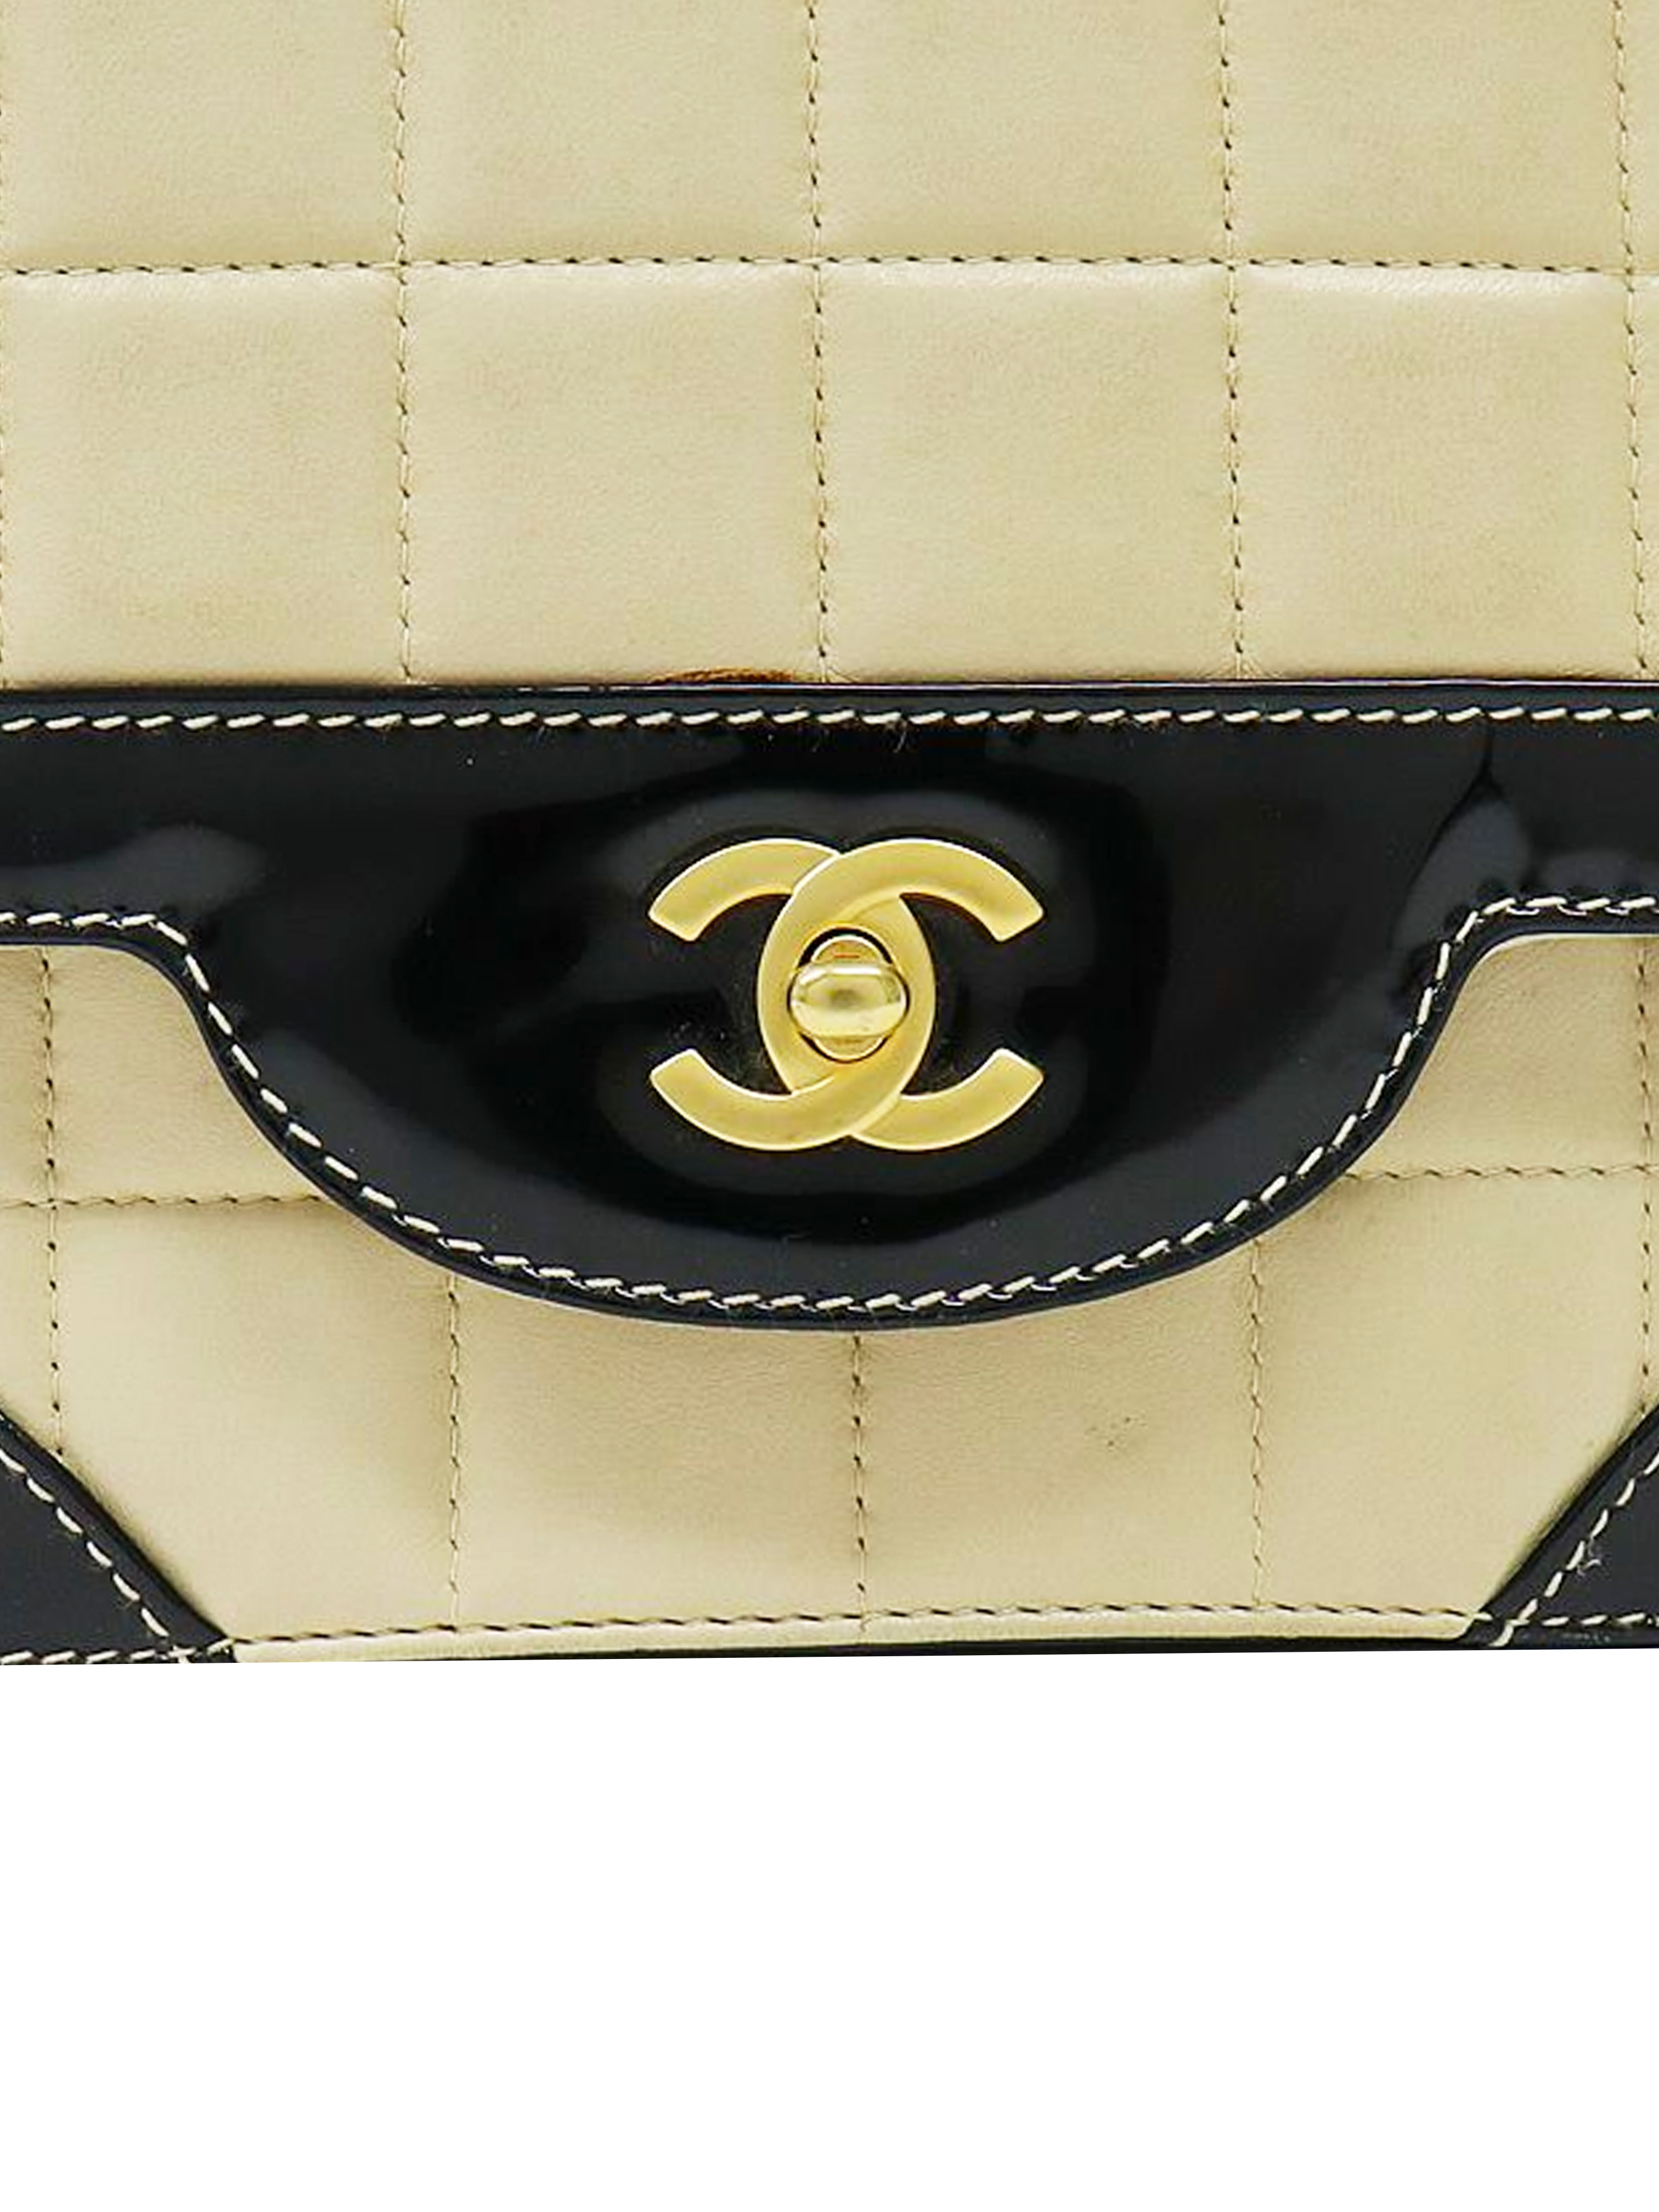 Chanel Bag 2000 - 491 For Sale on 1stDibs